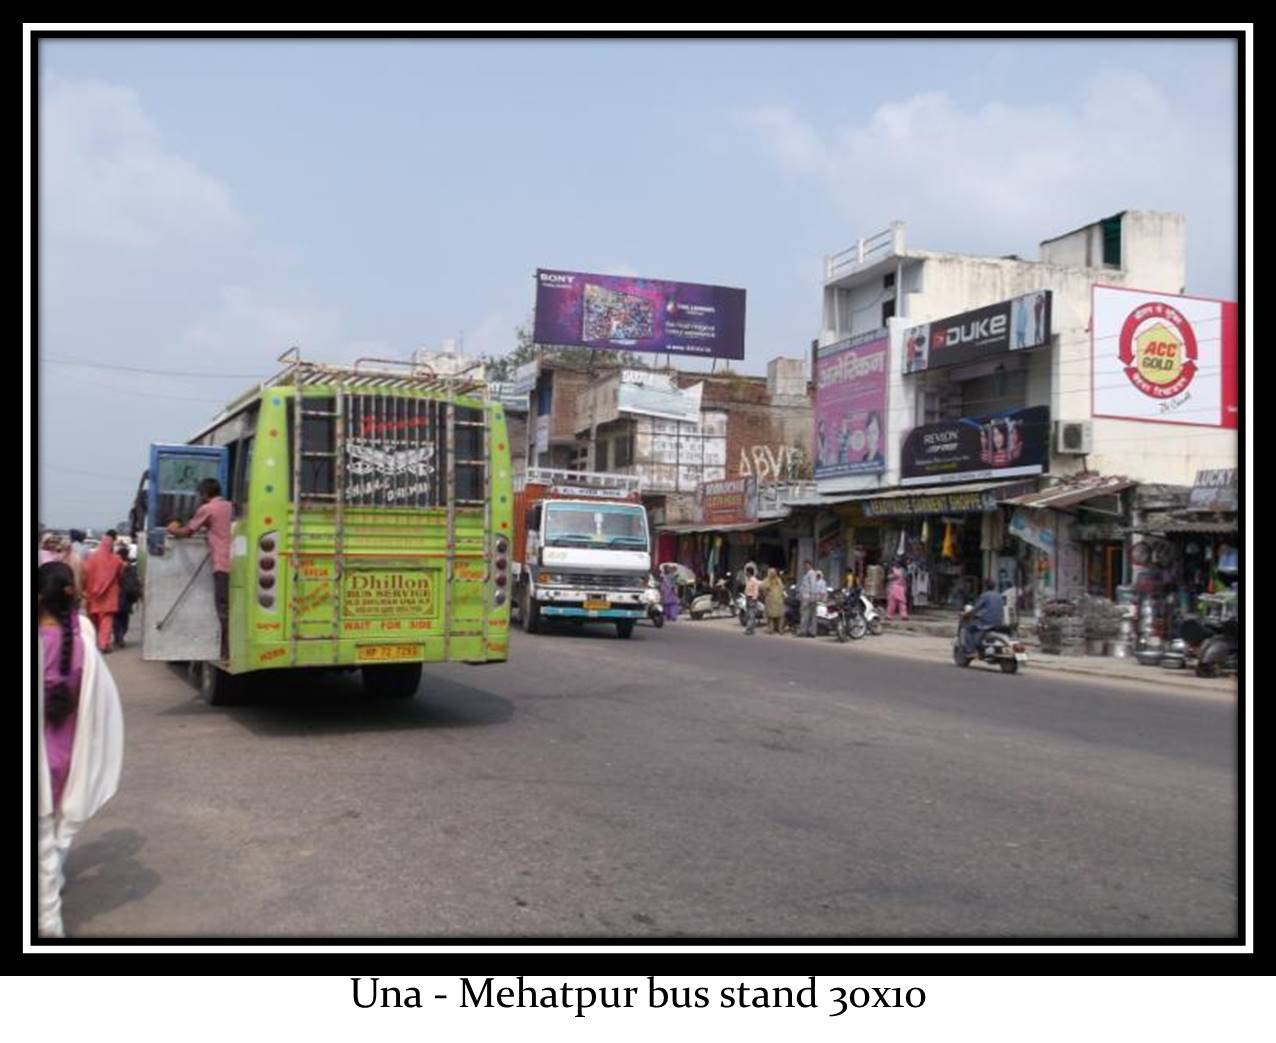 Mehatpur bus stand, Una